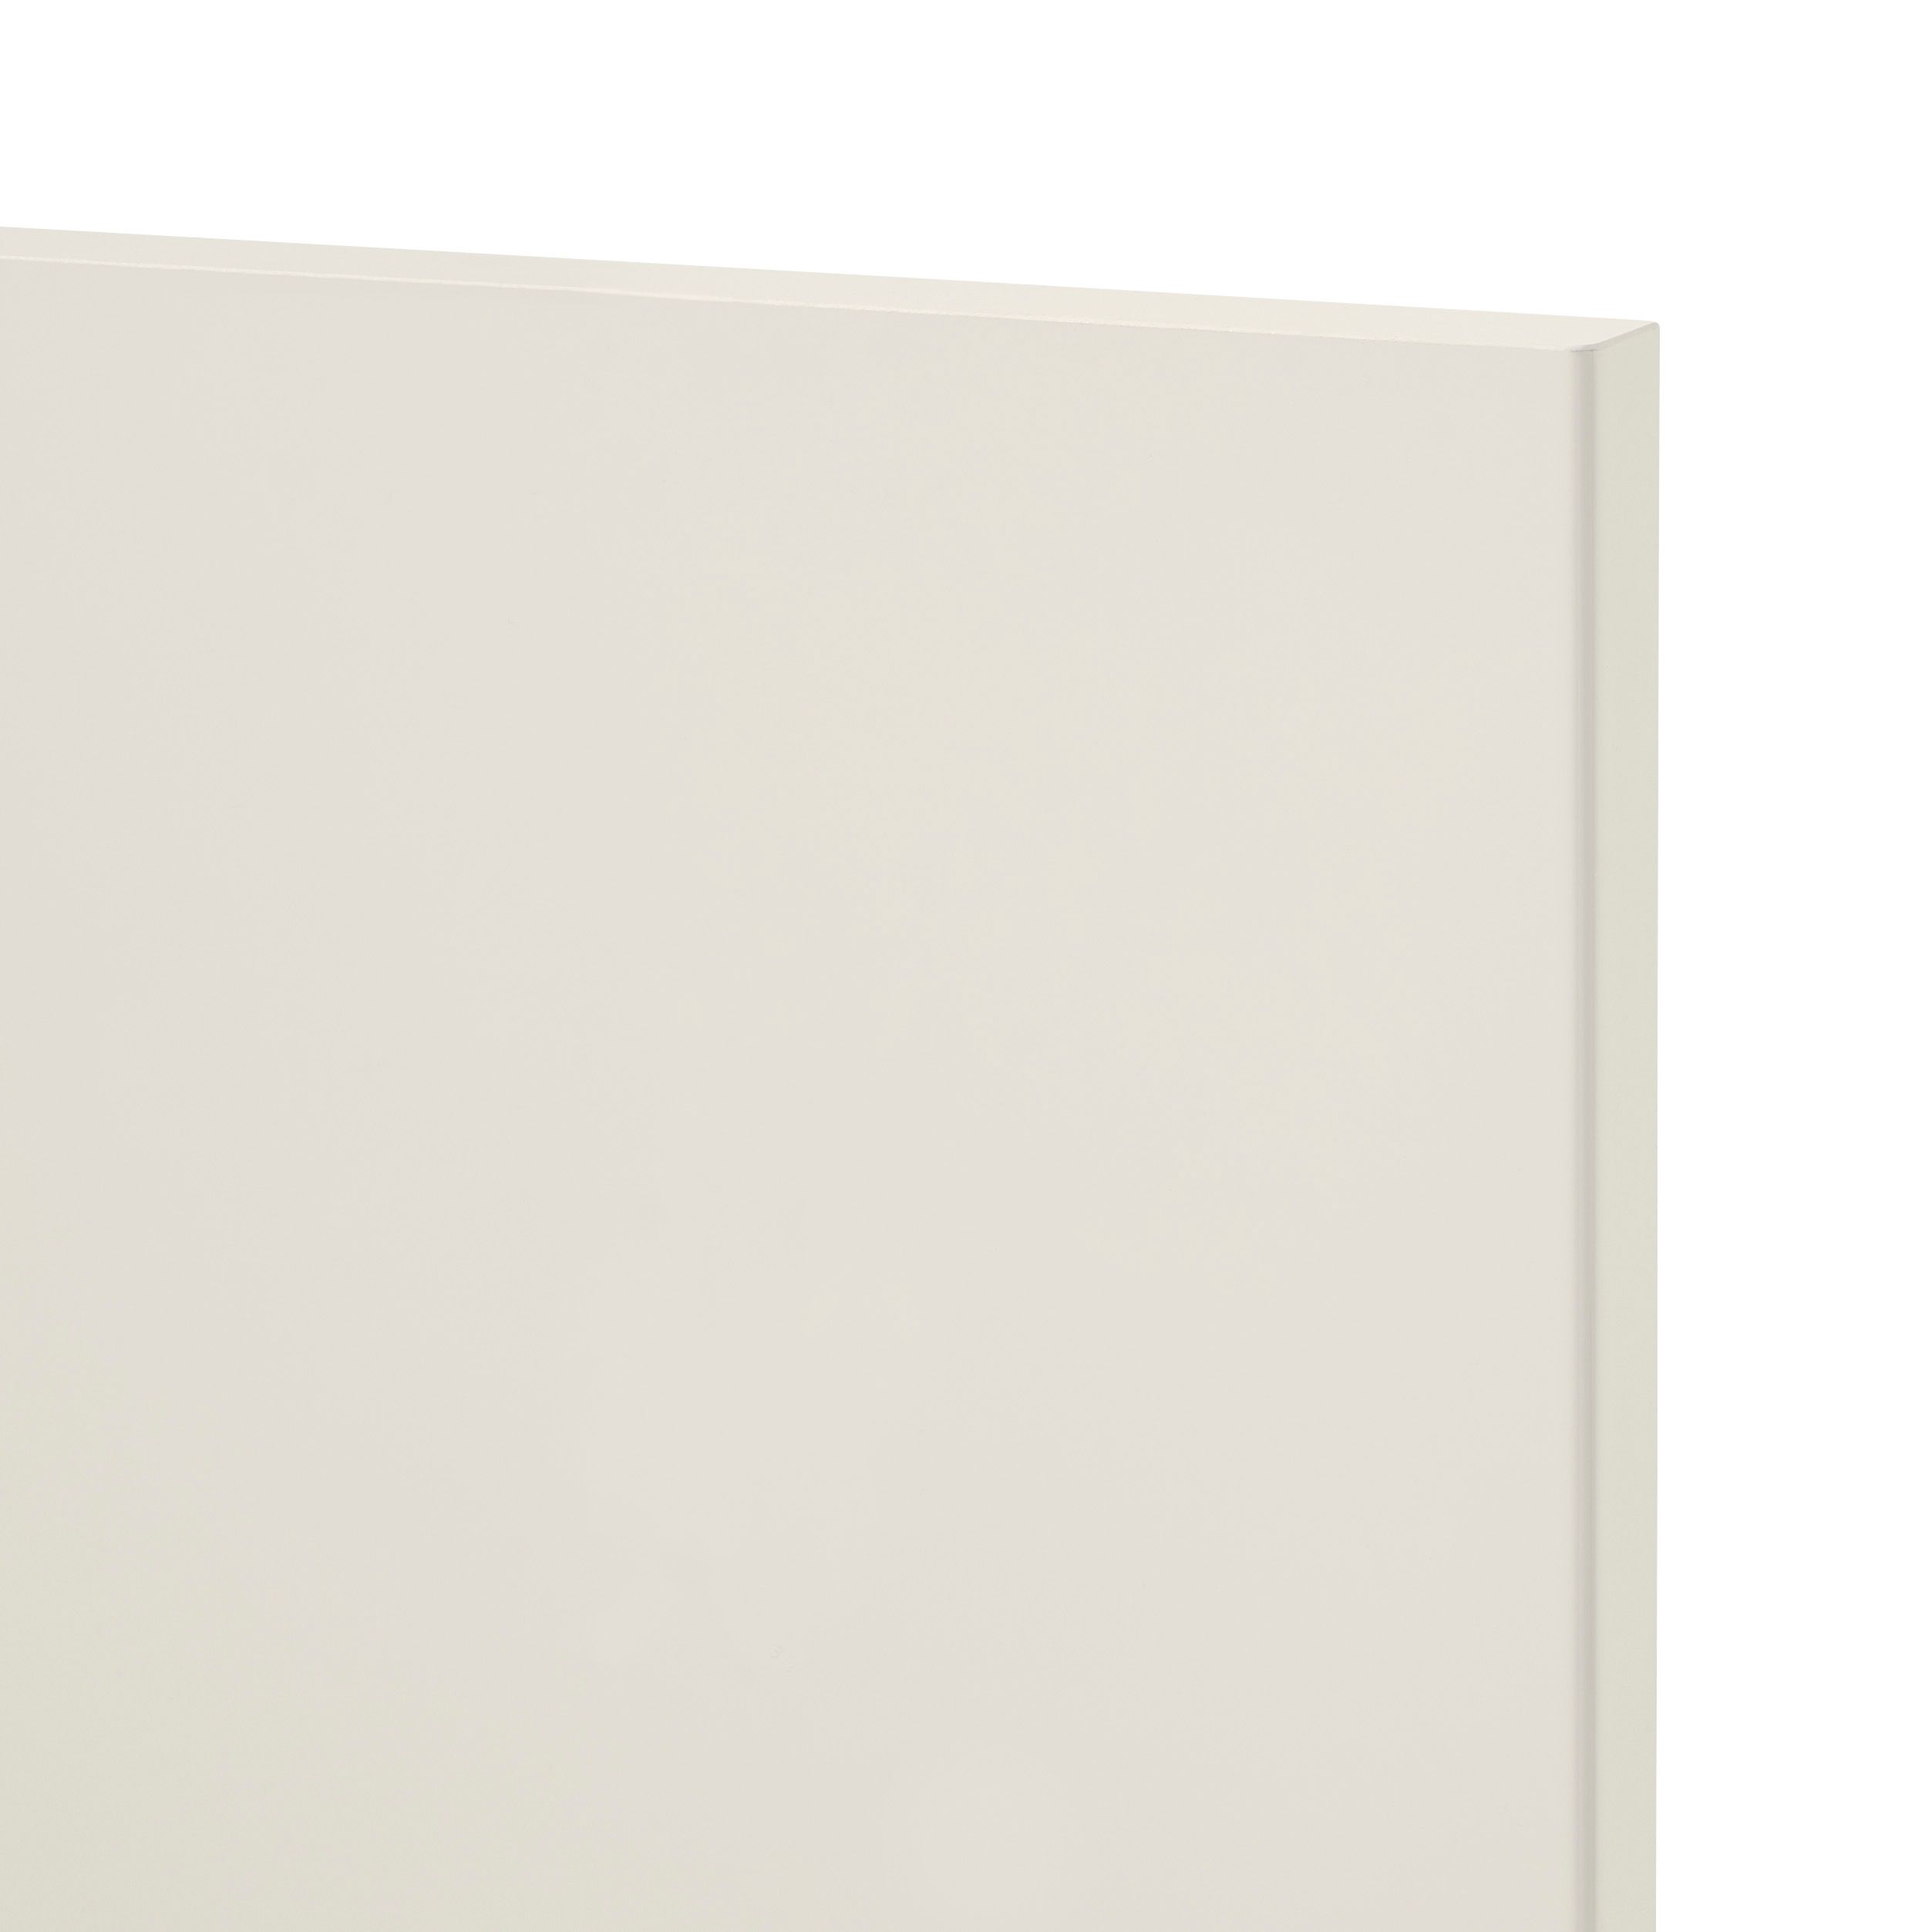 GoodHome Stevia Gloss cream slab Highline Cabinet door (W)300mm (H)715mm (T)18mm